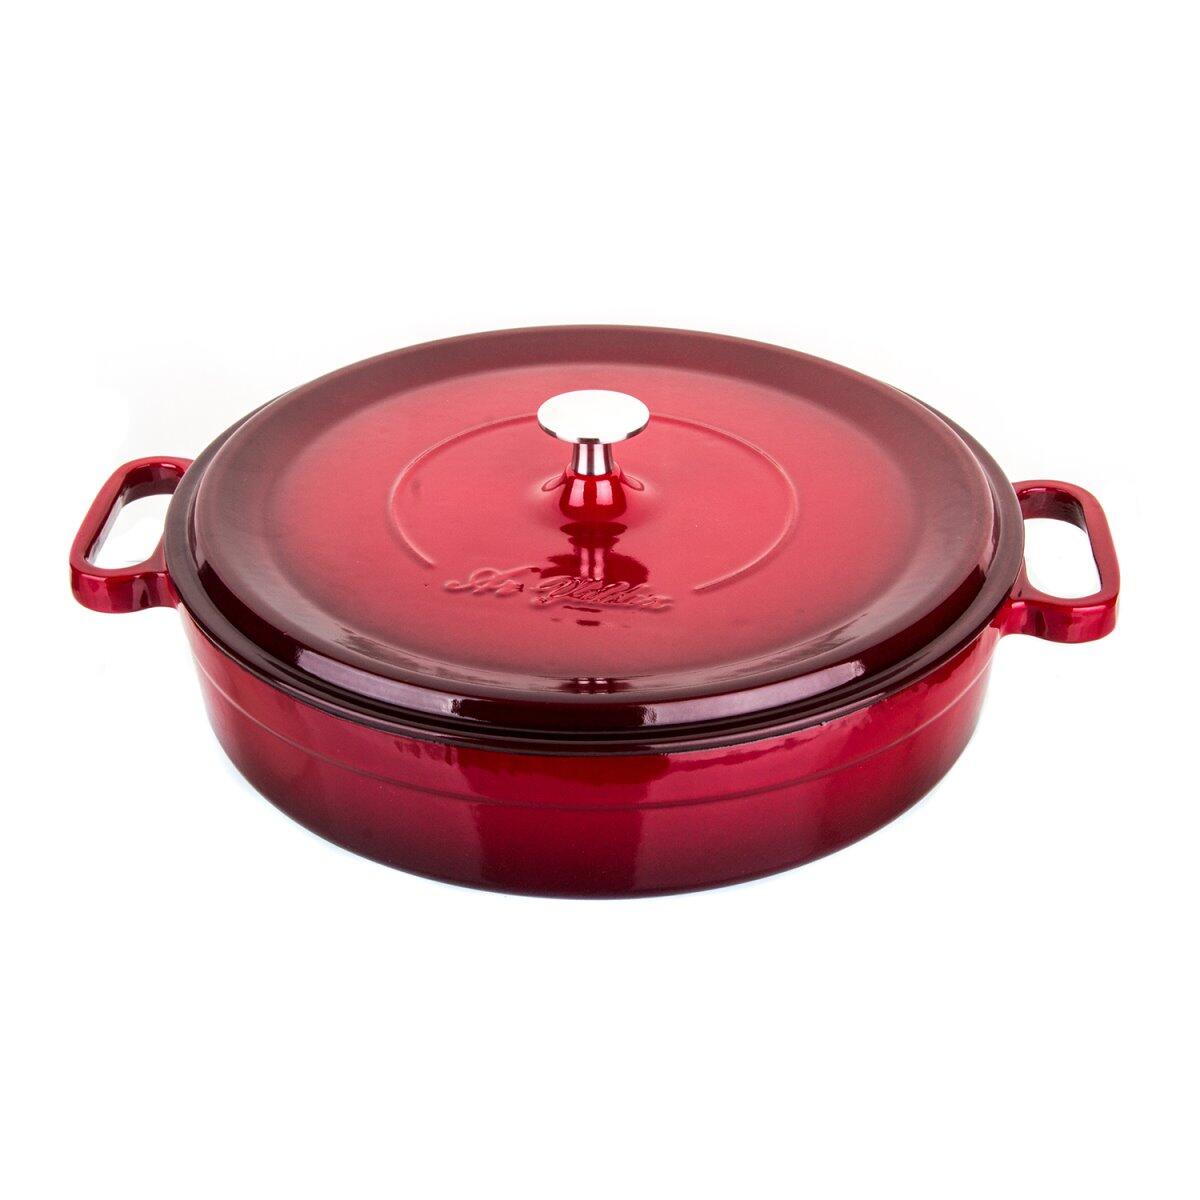 Aryıldız Cast Iron Pot 28cm Red